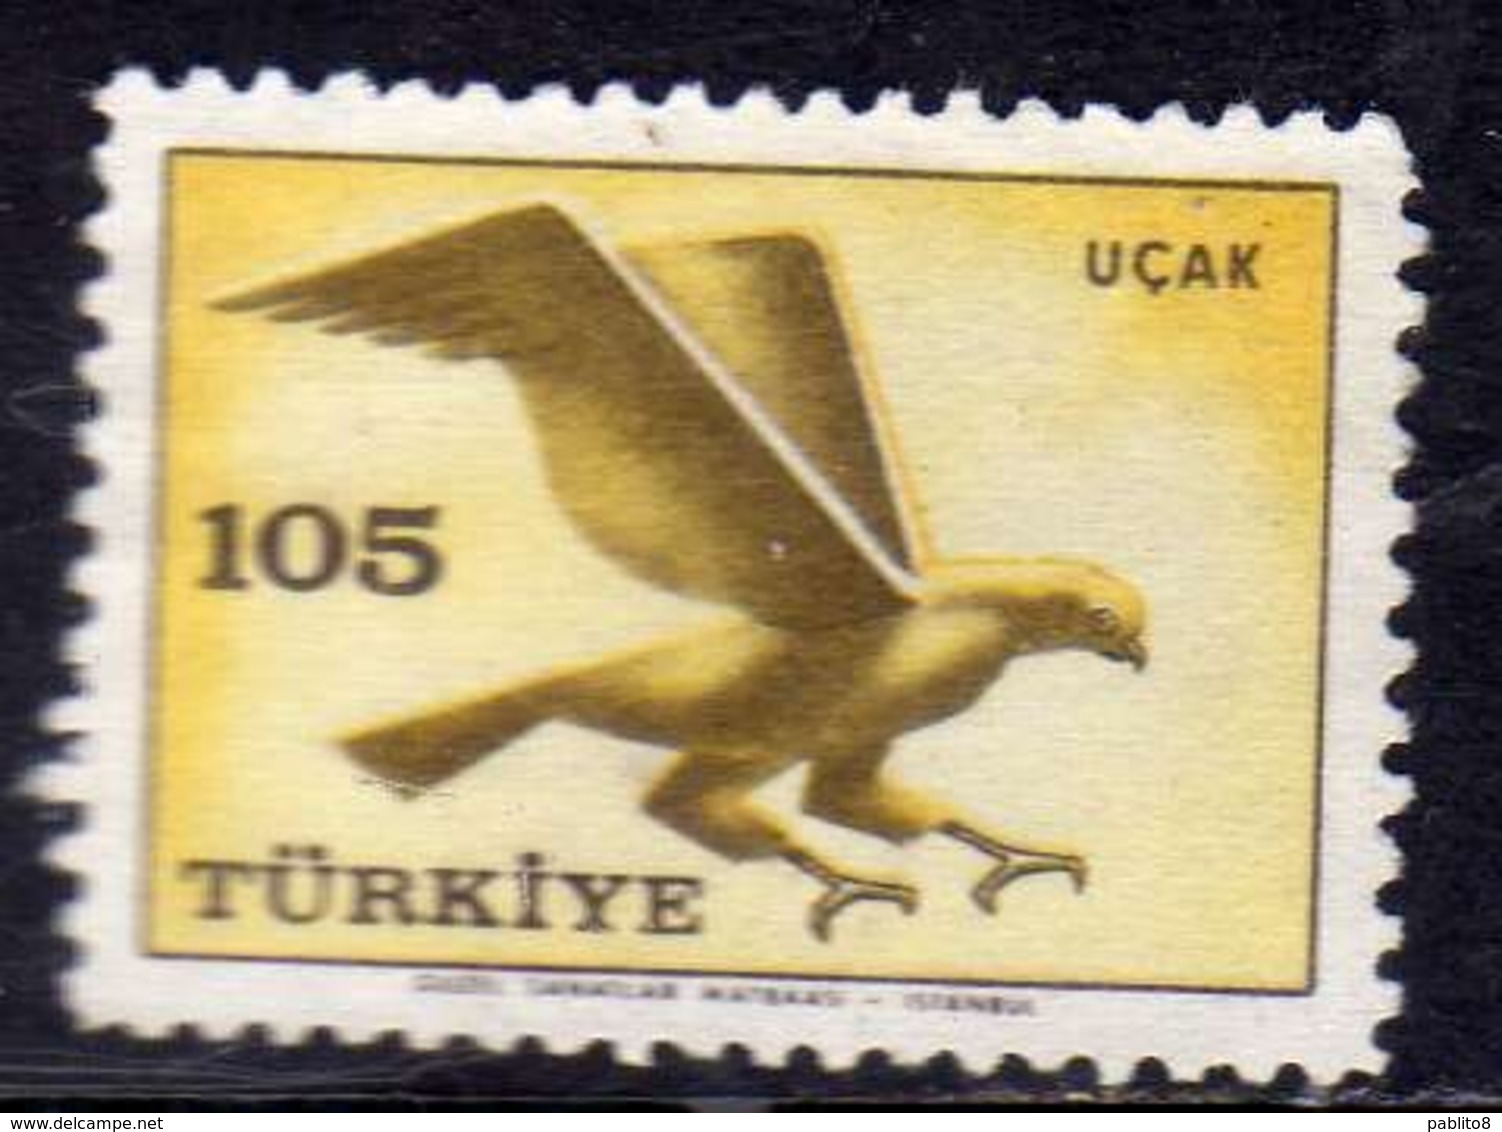 TURCHIA TURKÍA TURKEY 1959 AIR MAIL POSTA AEREA BIRD FAUNA AVICOLA HAWK FALCO 105k MNH - Corréo Aéreo